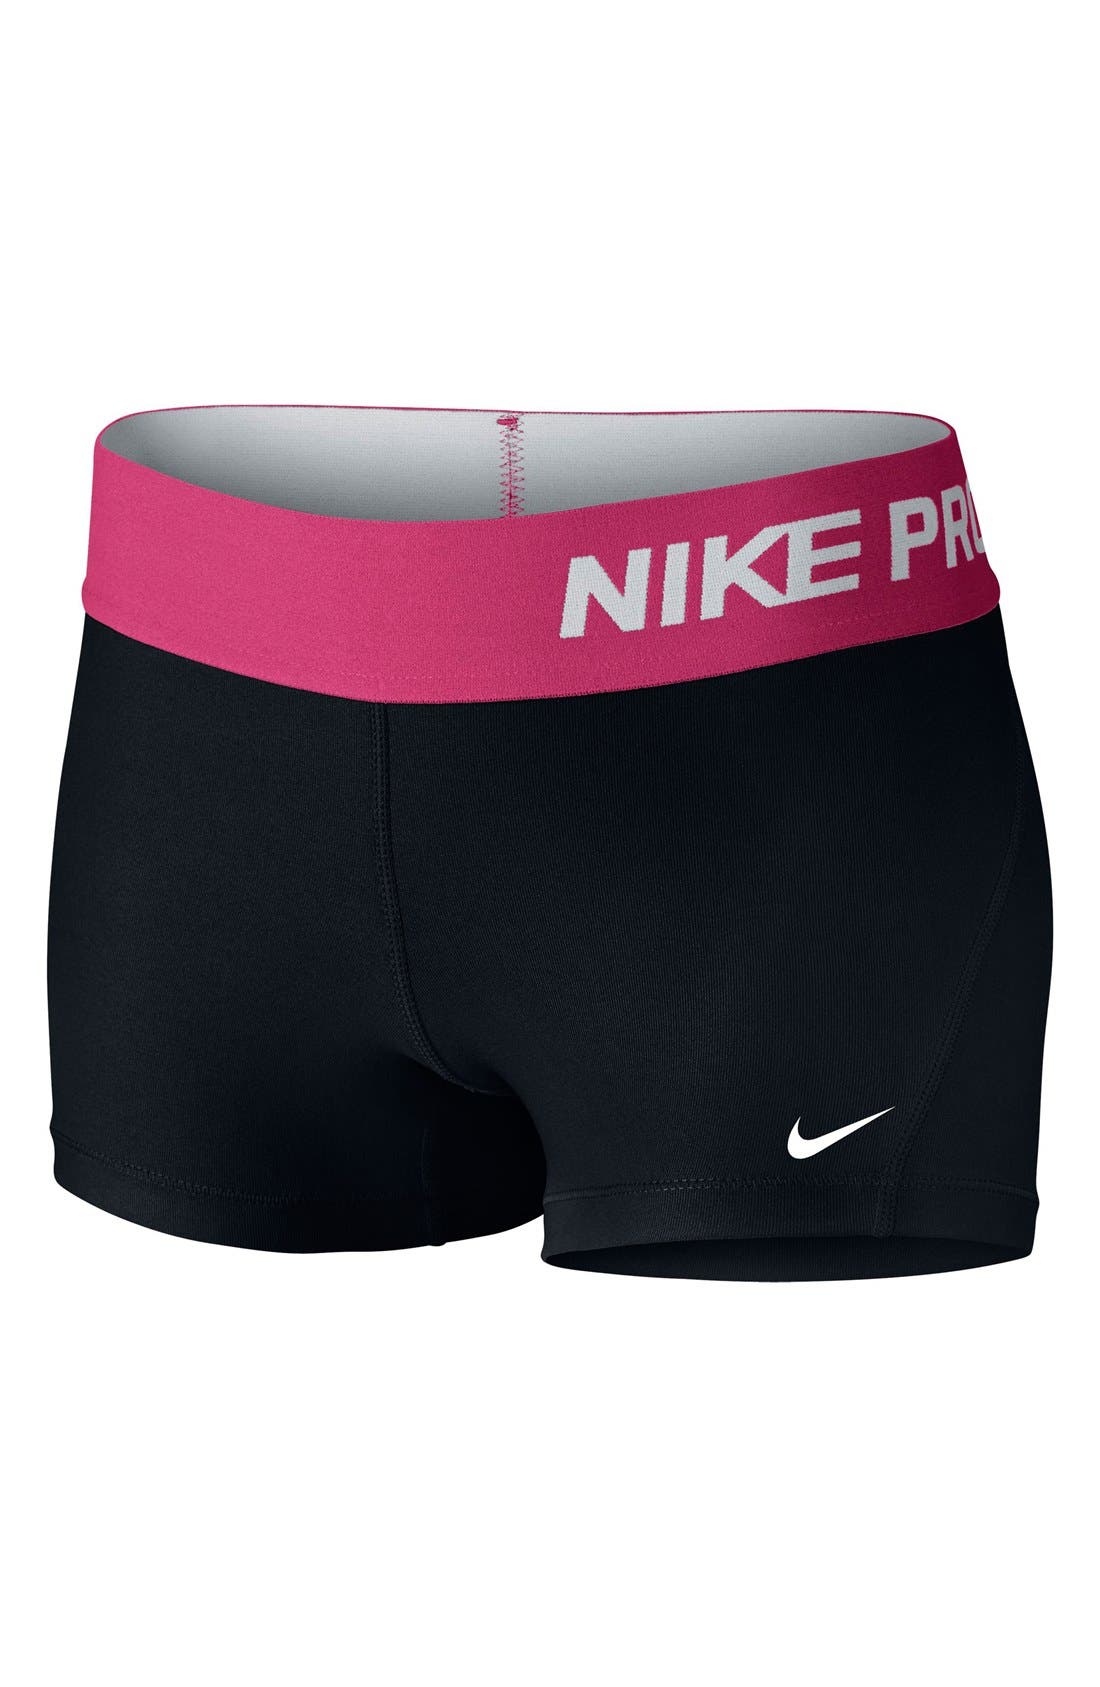 girls nike compression shorts